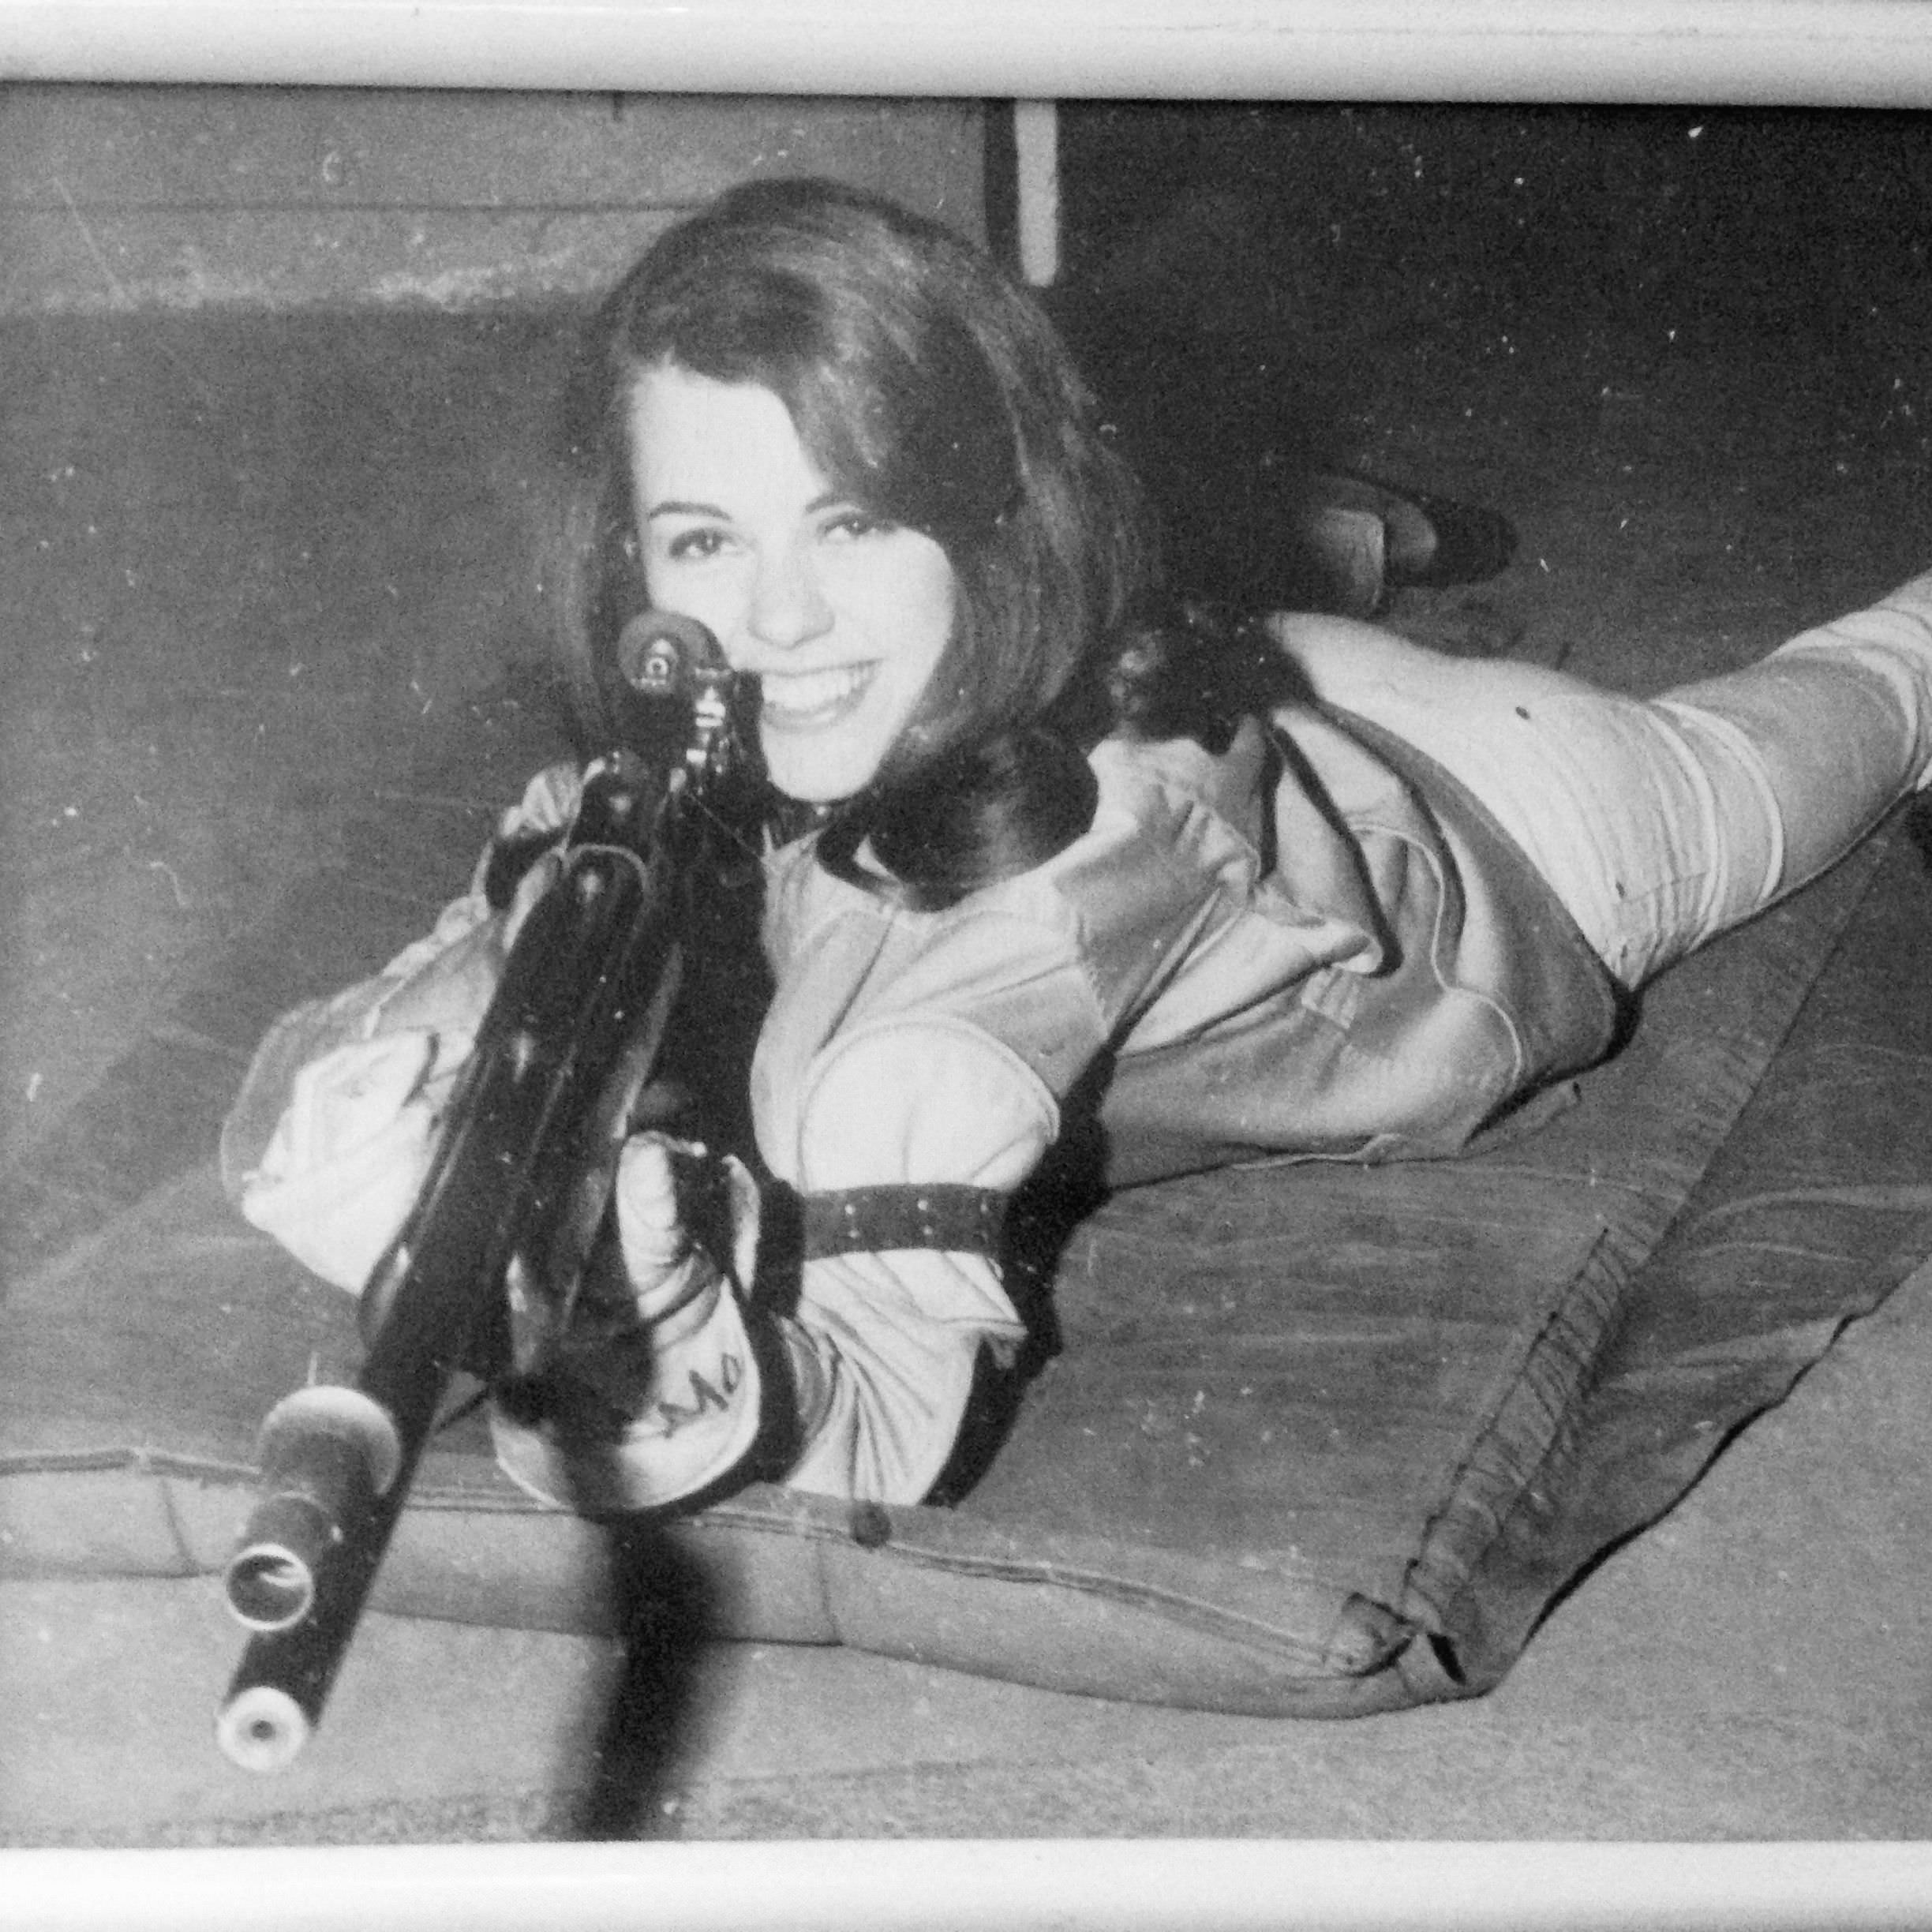 A University of Missouri female rifle team member in 1968.